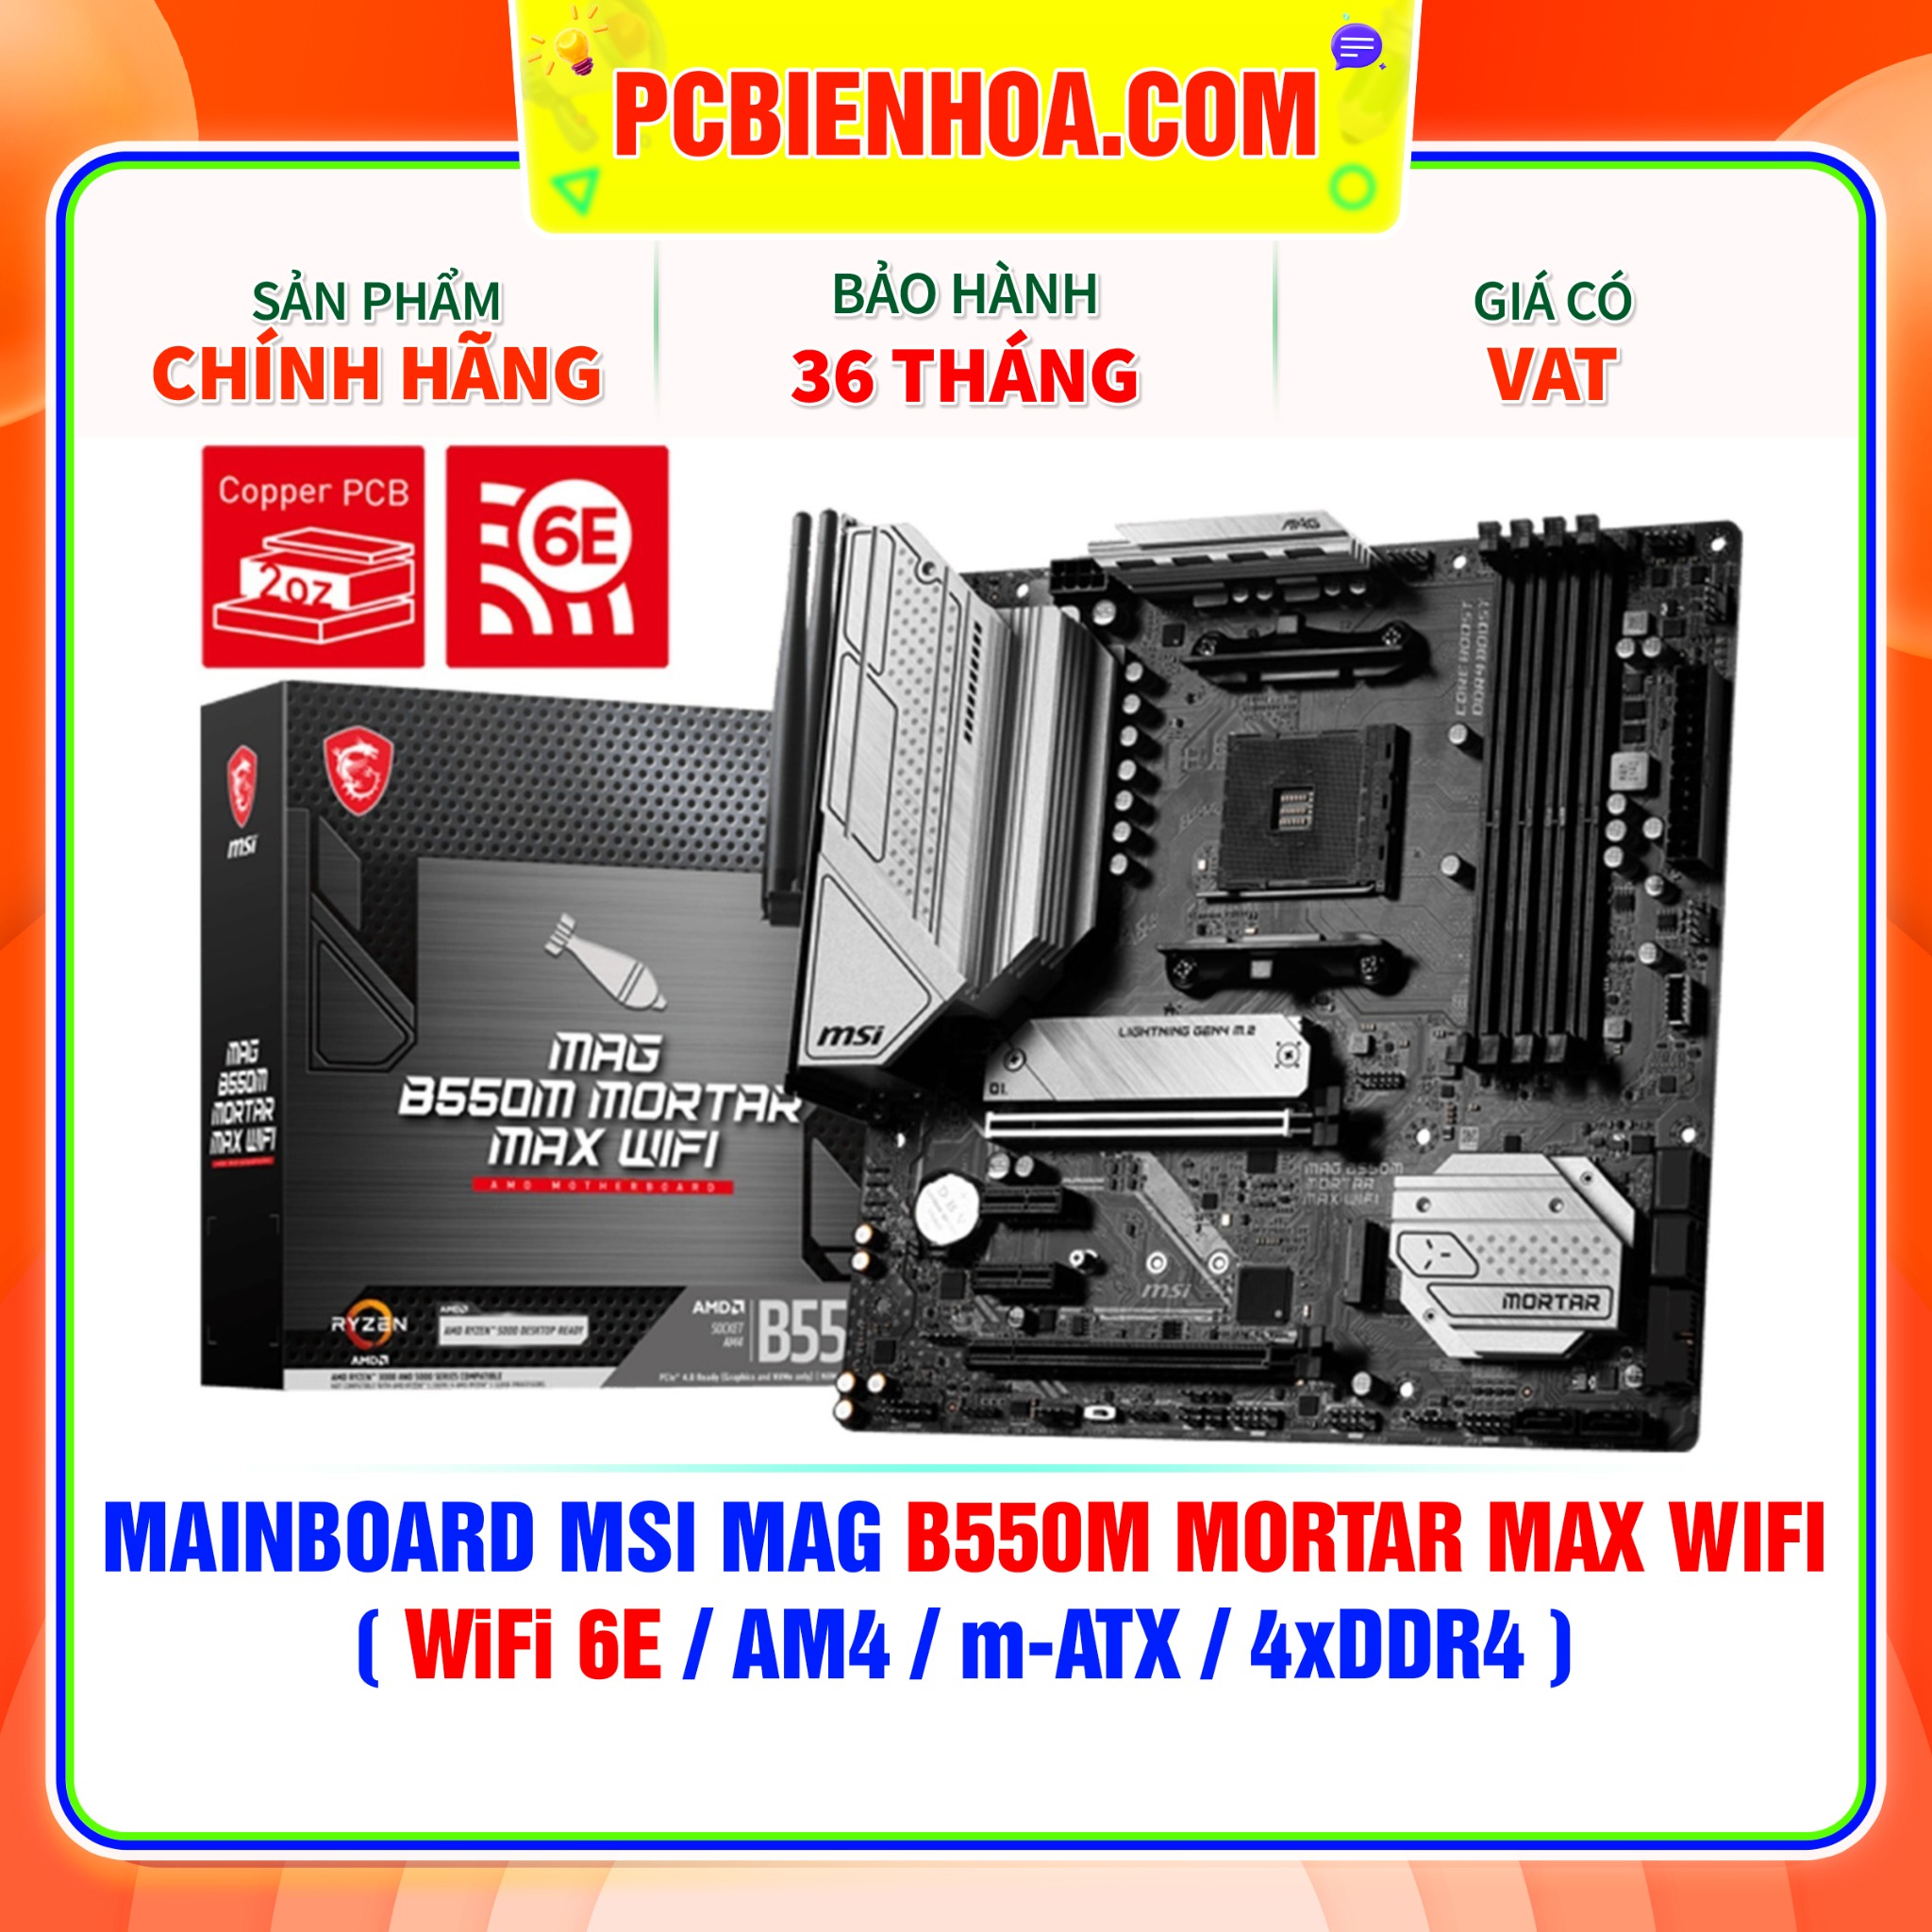 MAINBOARD MSI MAG B550M MORTAR MAX WIFI  WiFi 6E AM4 m-ATX 4xDDR4